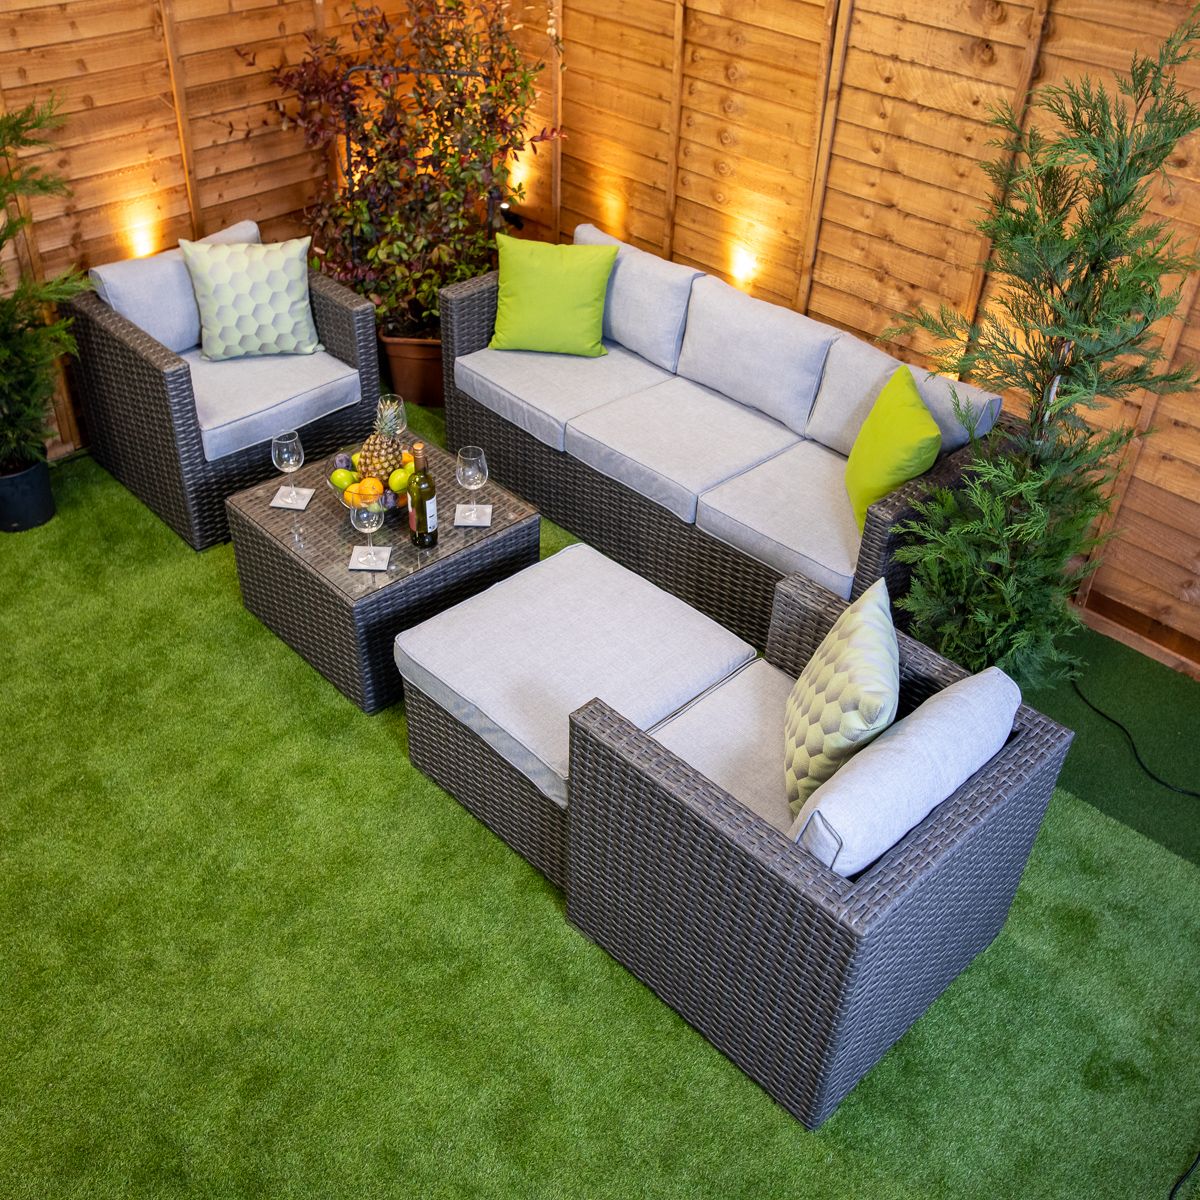 Hosting Outdoor Gatherings: Rattan Garden Furniture Setup Tips